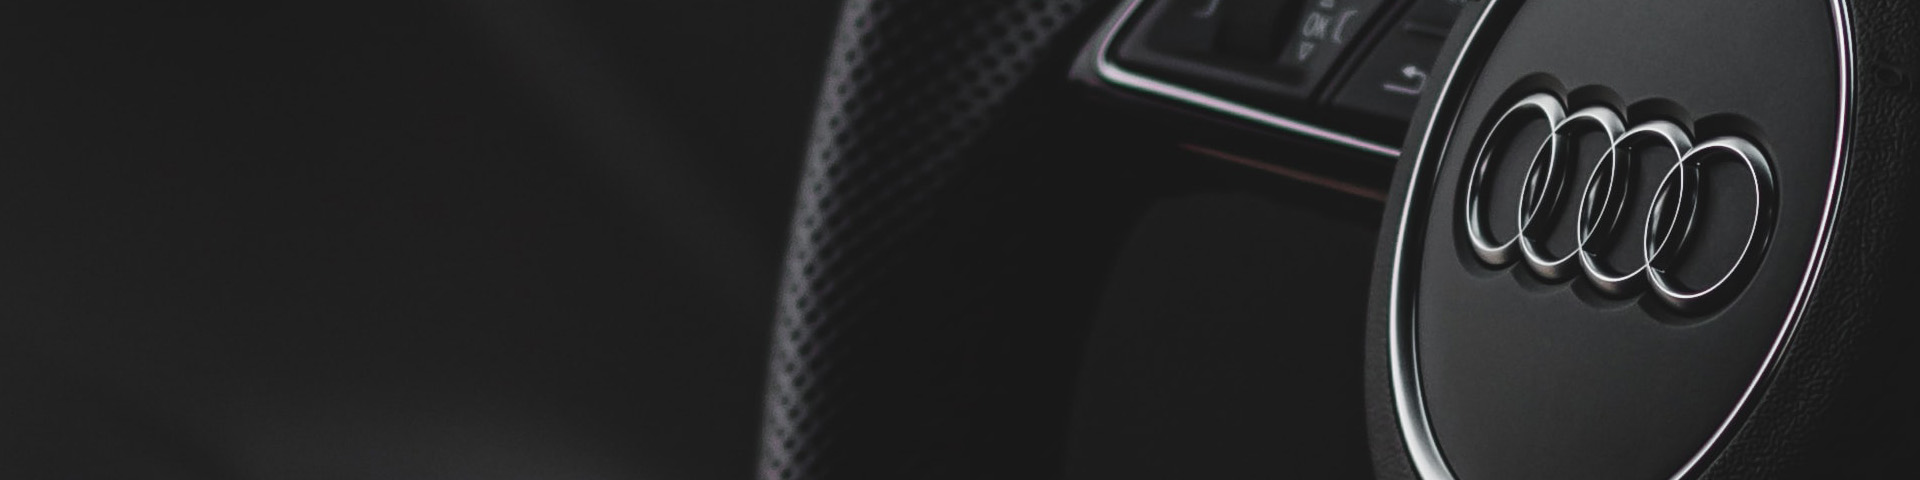 Audi Q5 Backdrop